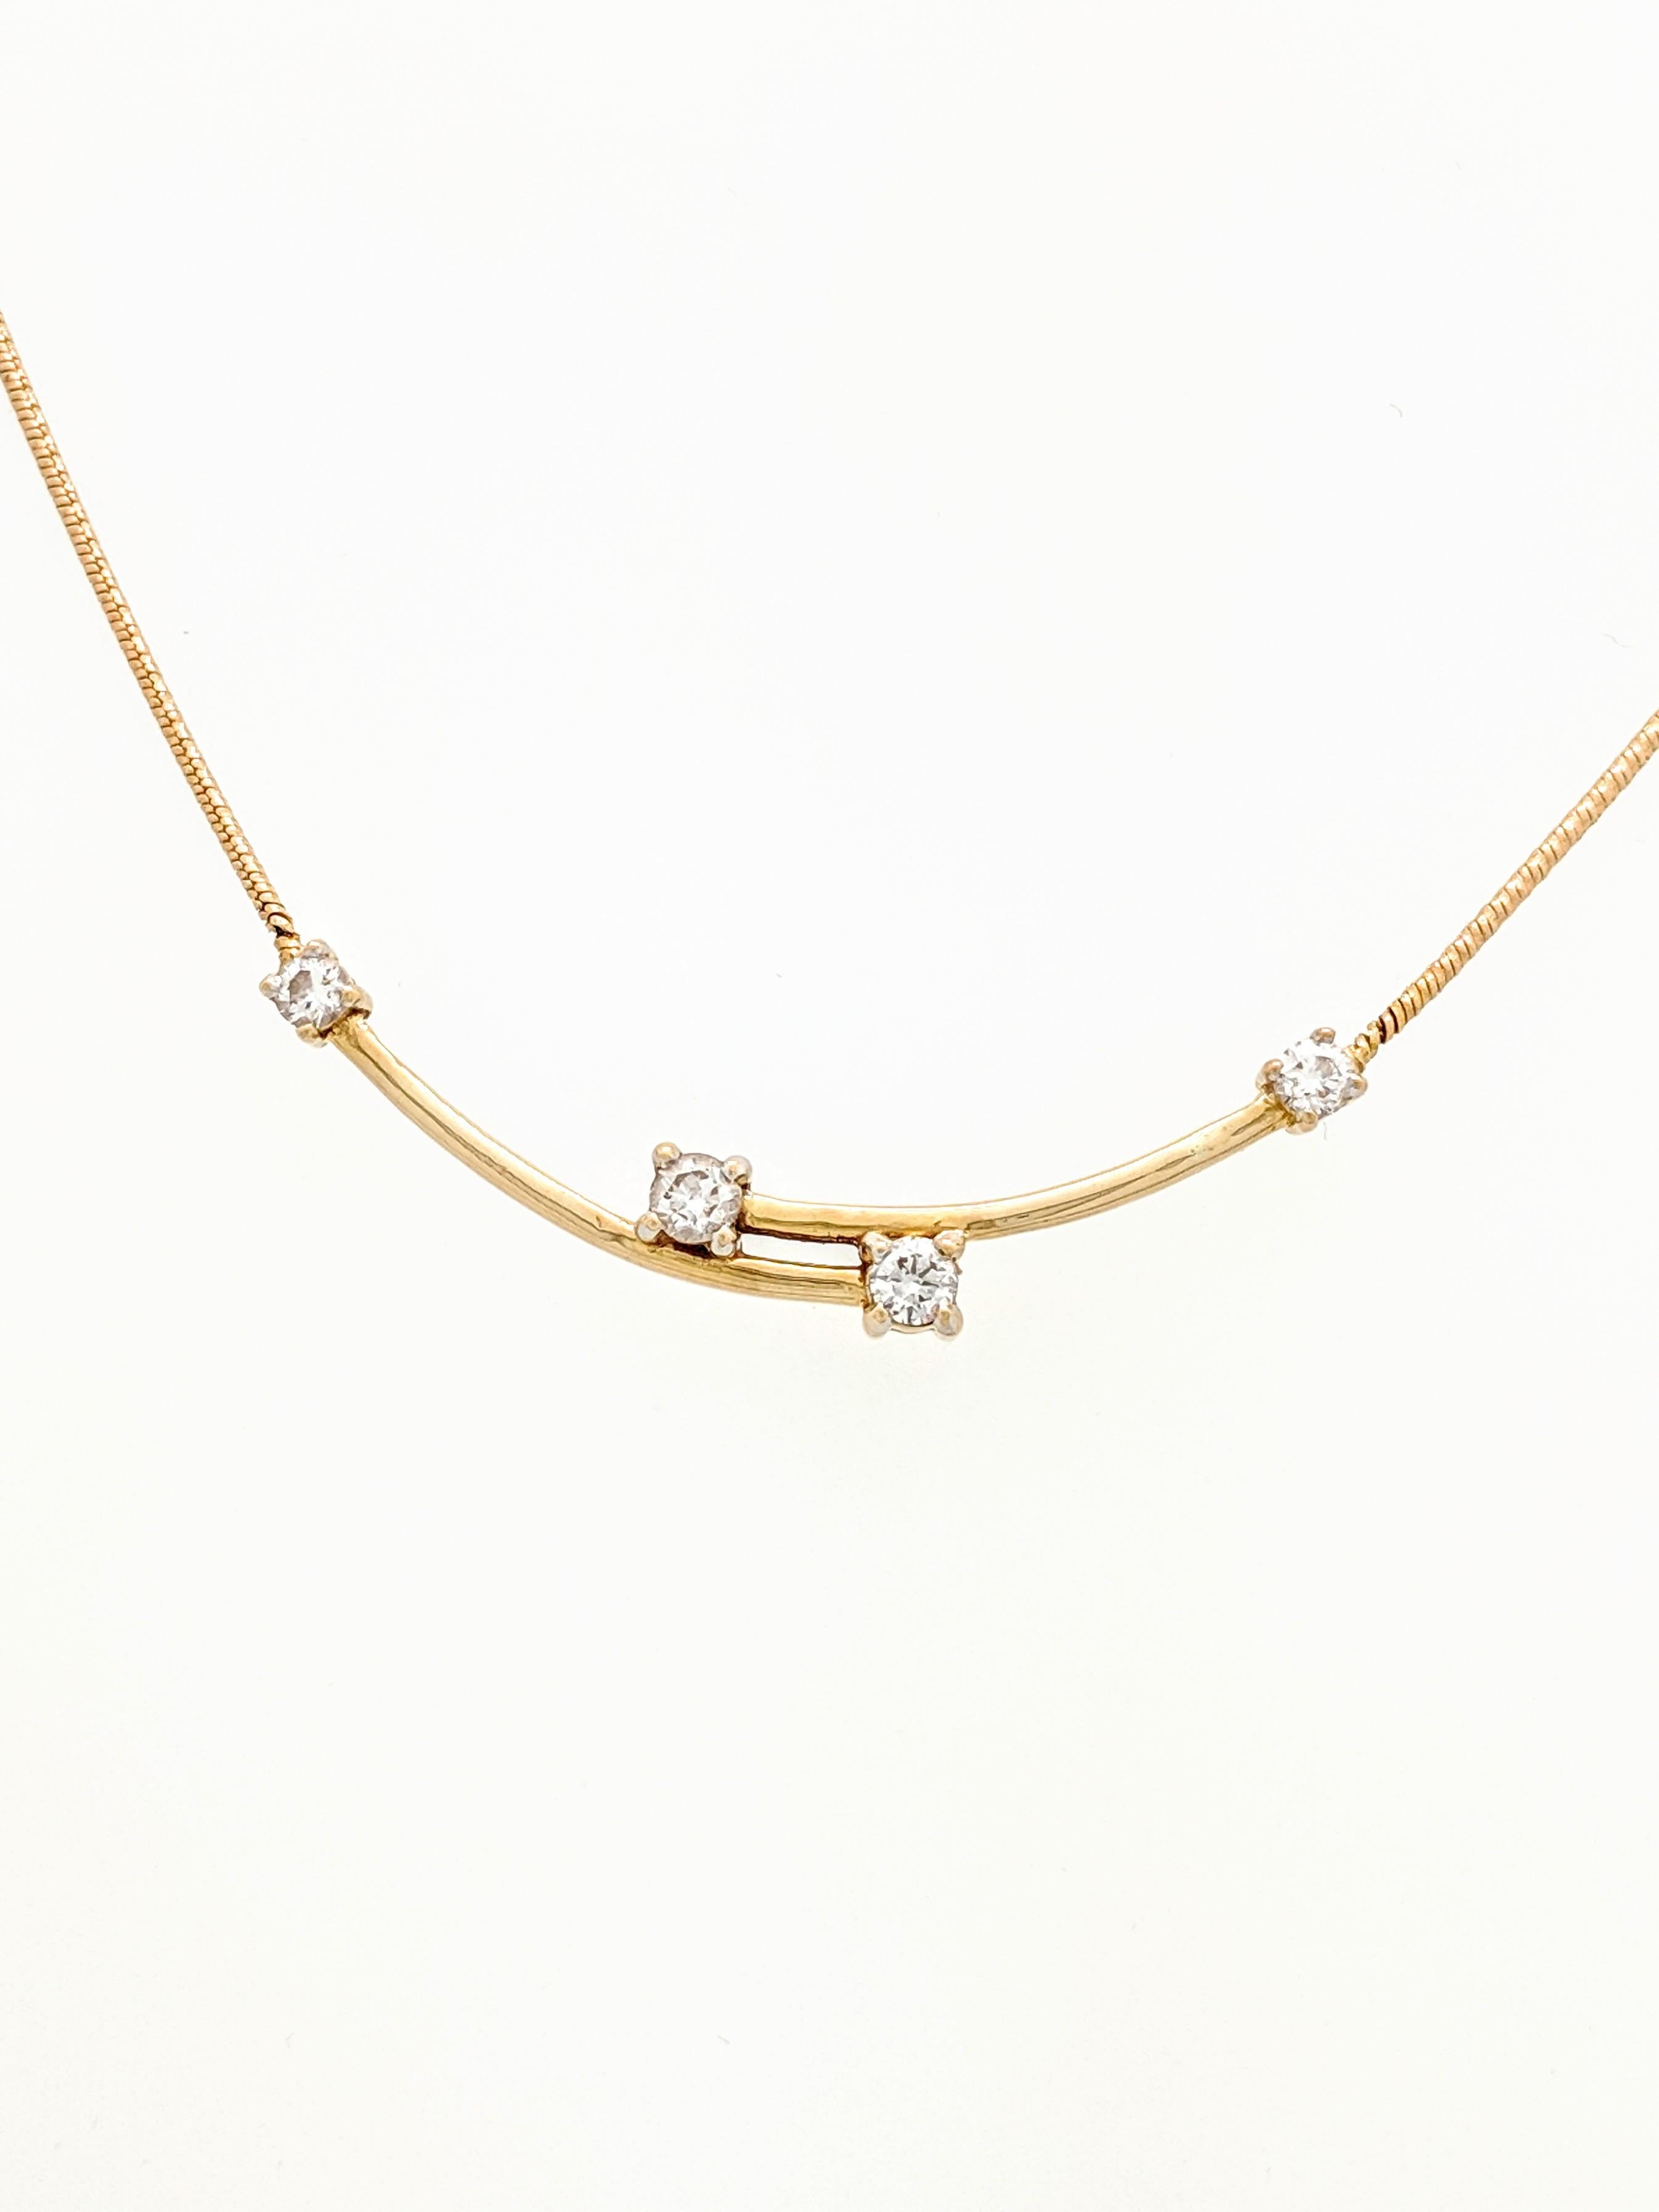 Round Cut 22 Karat Yellow Gold Diamond Bar Necklace .50 Carat SI1/H For Sale